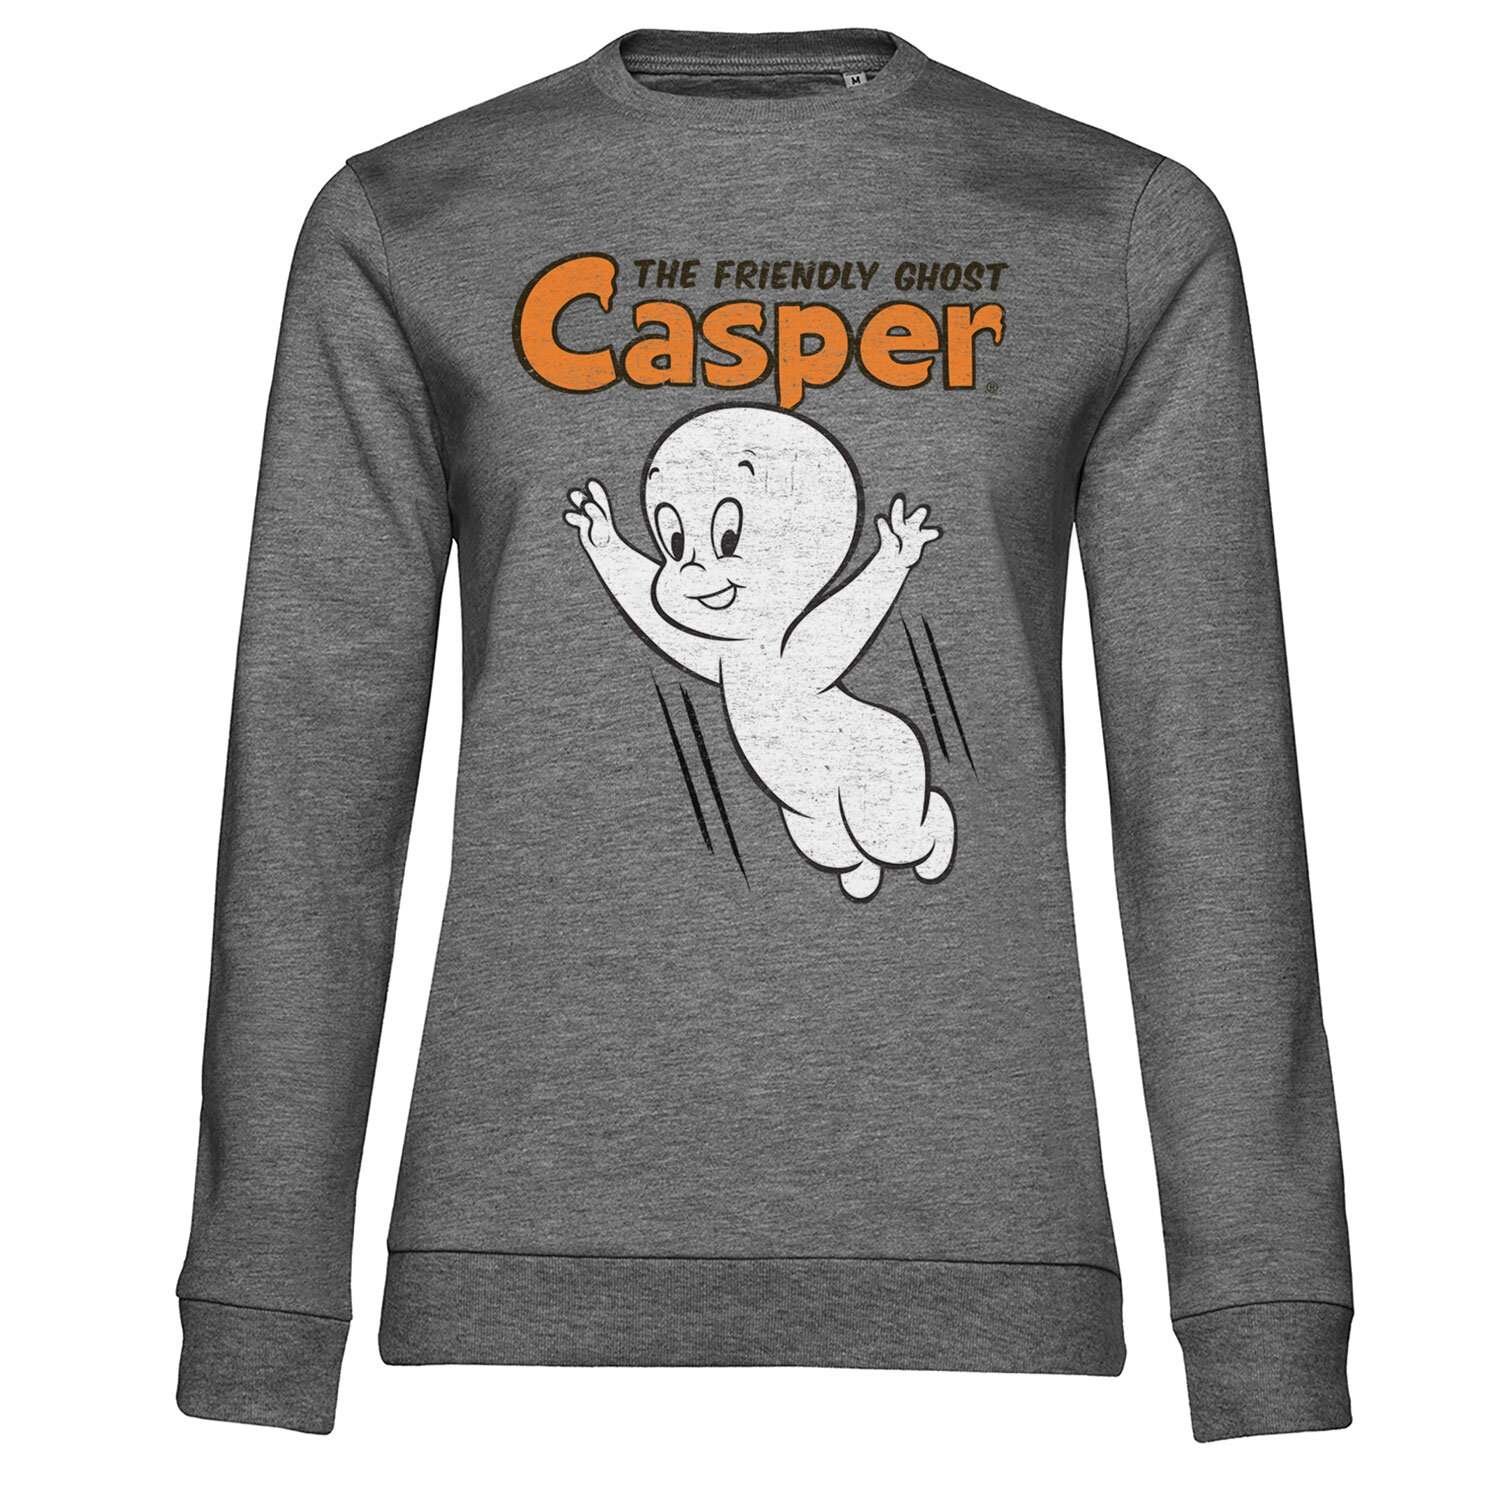 Casper - The Friendly Ghost Girly Sweatshirt